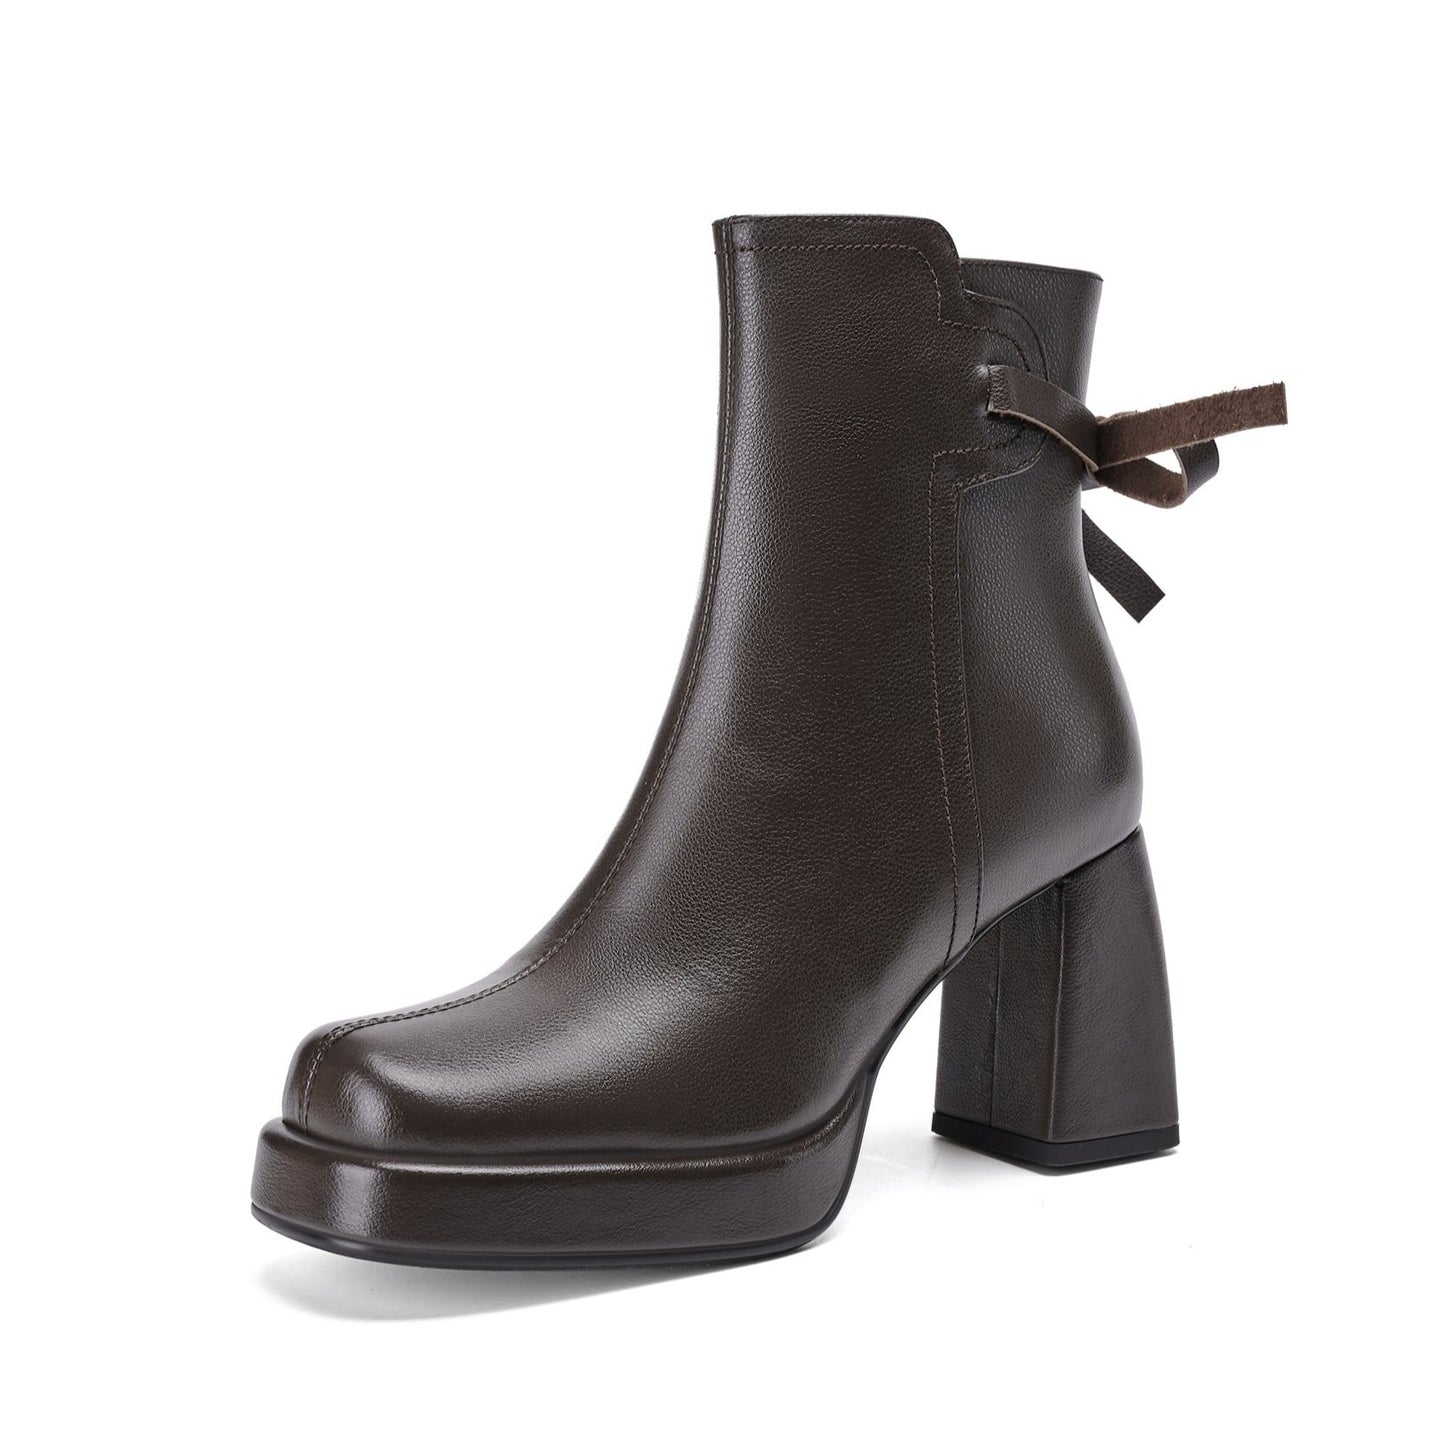 TinaCus Women's Genuine Leather High Heel Handmade Side Zip Platform Ankle Boots